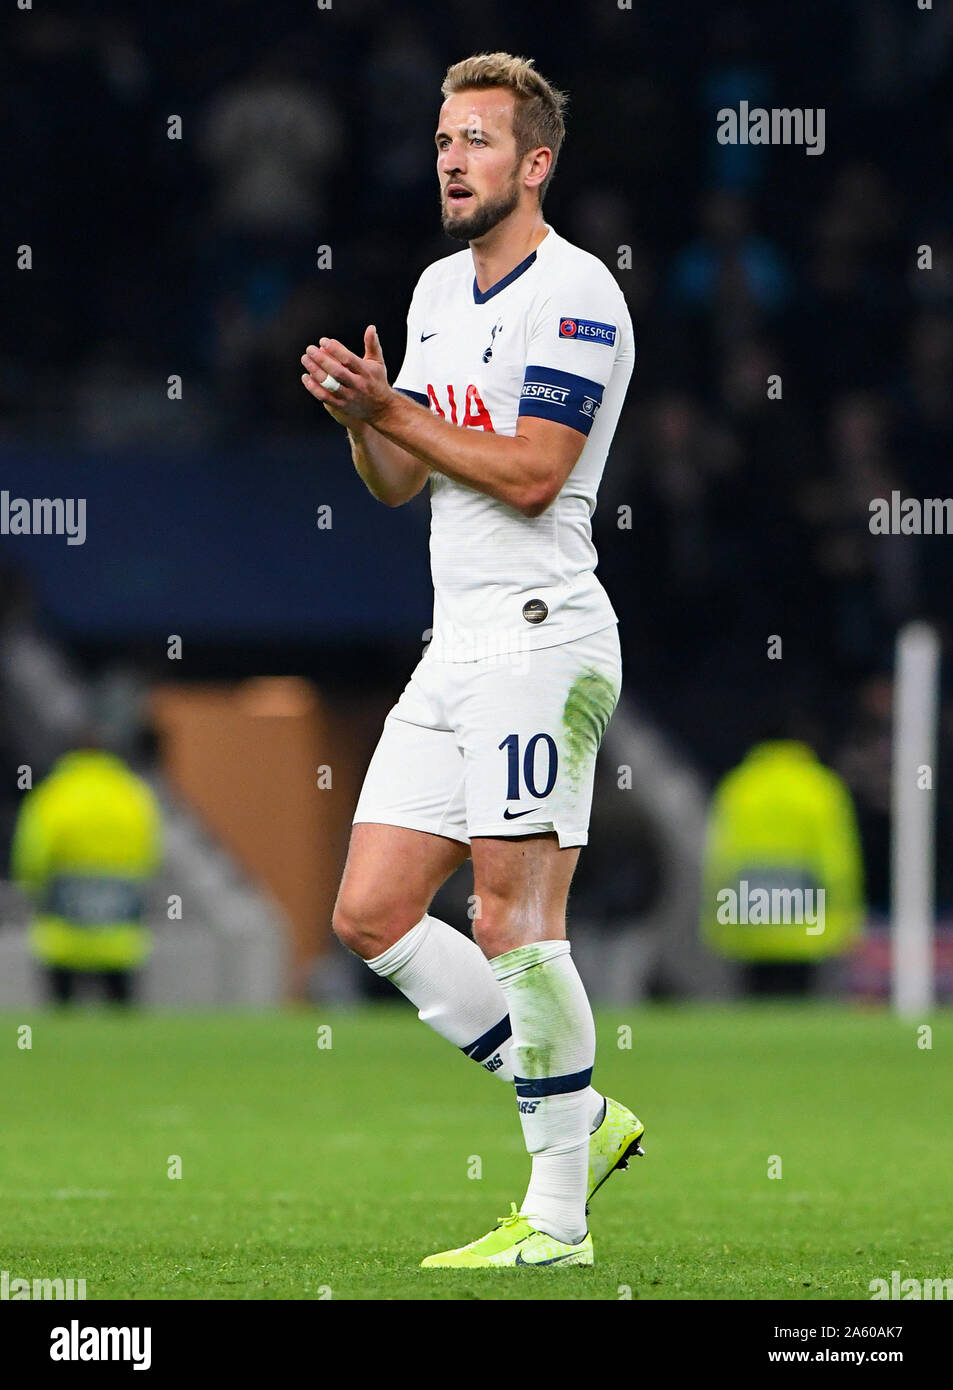 Harry Kane of Tottenham Hotspur - Tottenham Hotspur v Red Star Belgrade, UEFA Champions League - Group B, Tottenham Hotspur Stadium, London, UK - 22nd October 2019 Stock Photo